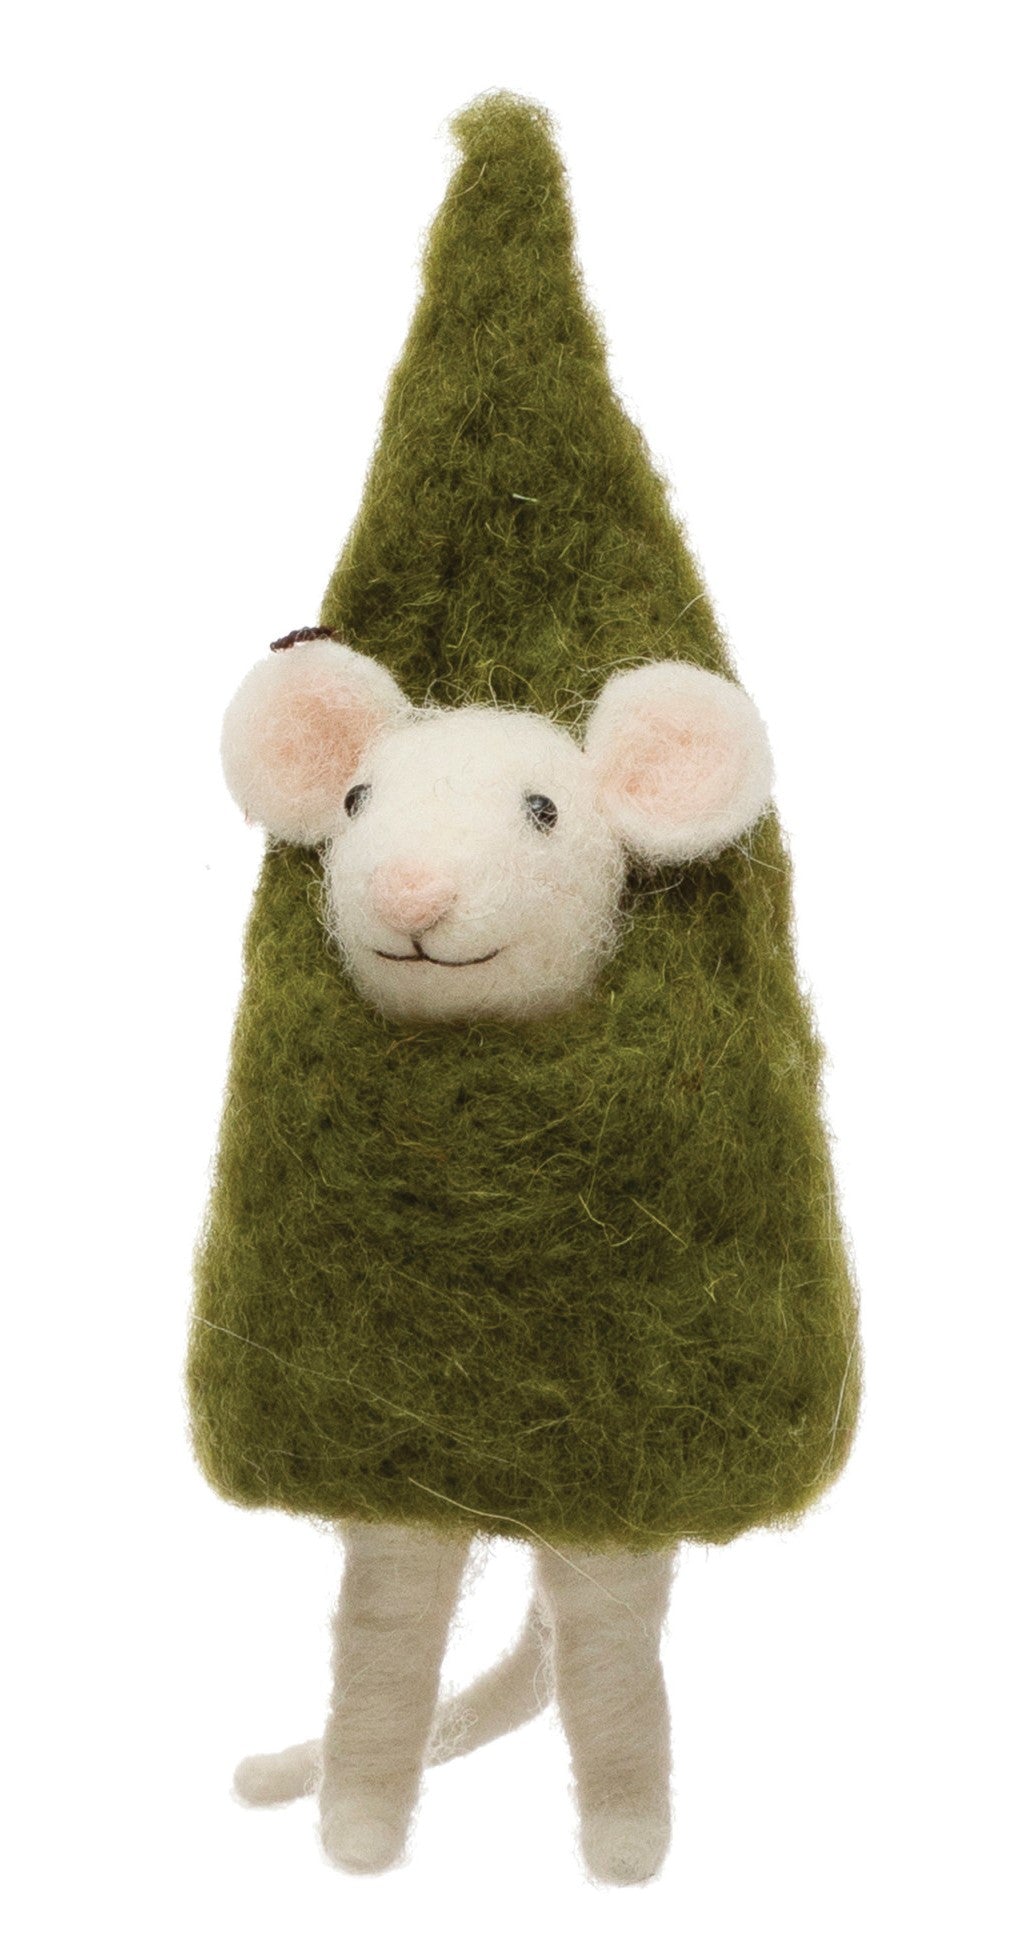 Wool Felt Mouse in Tree Costume